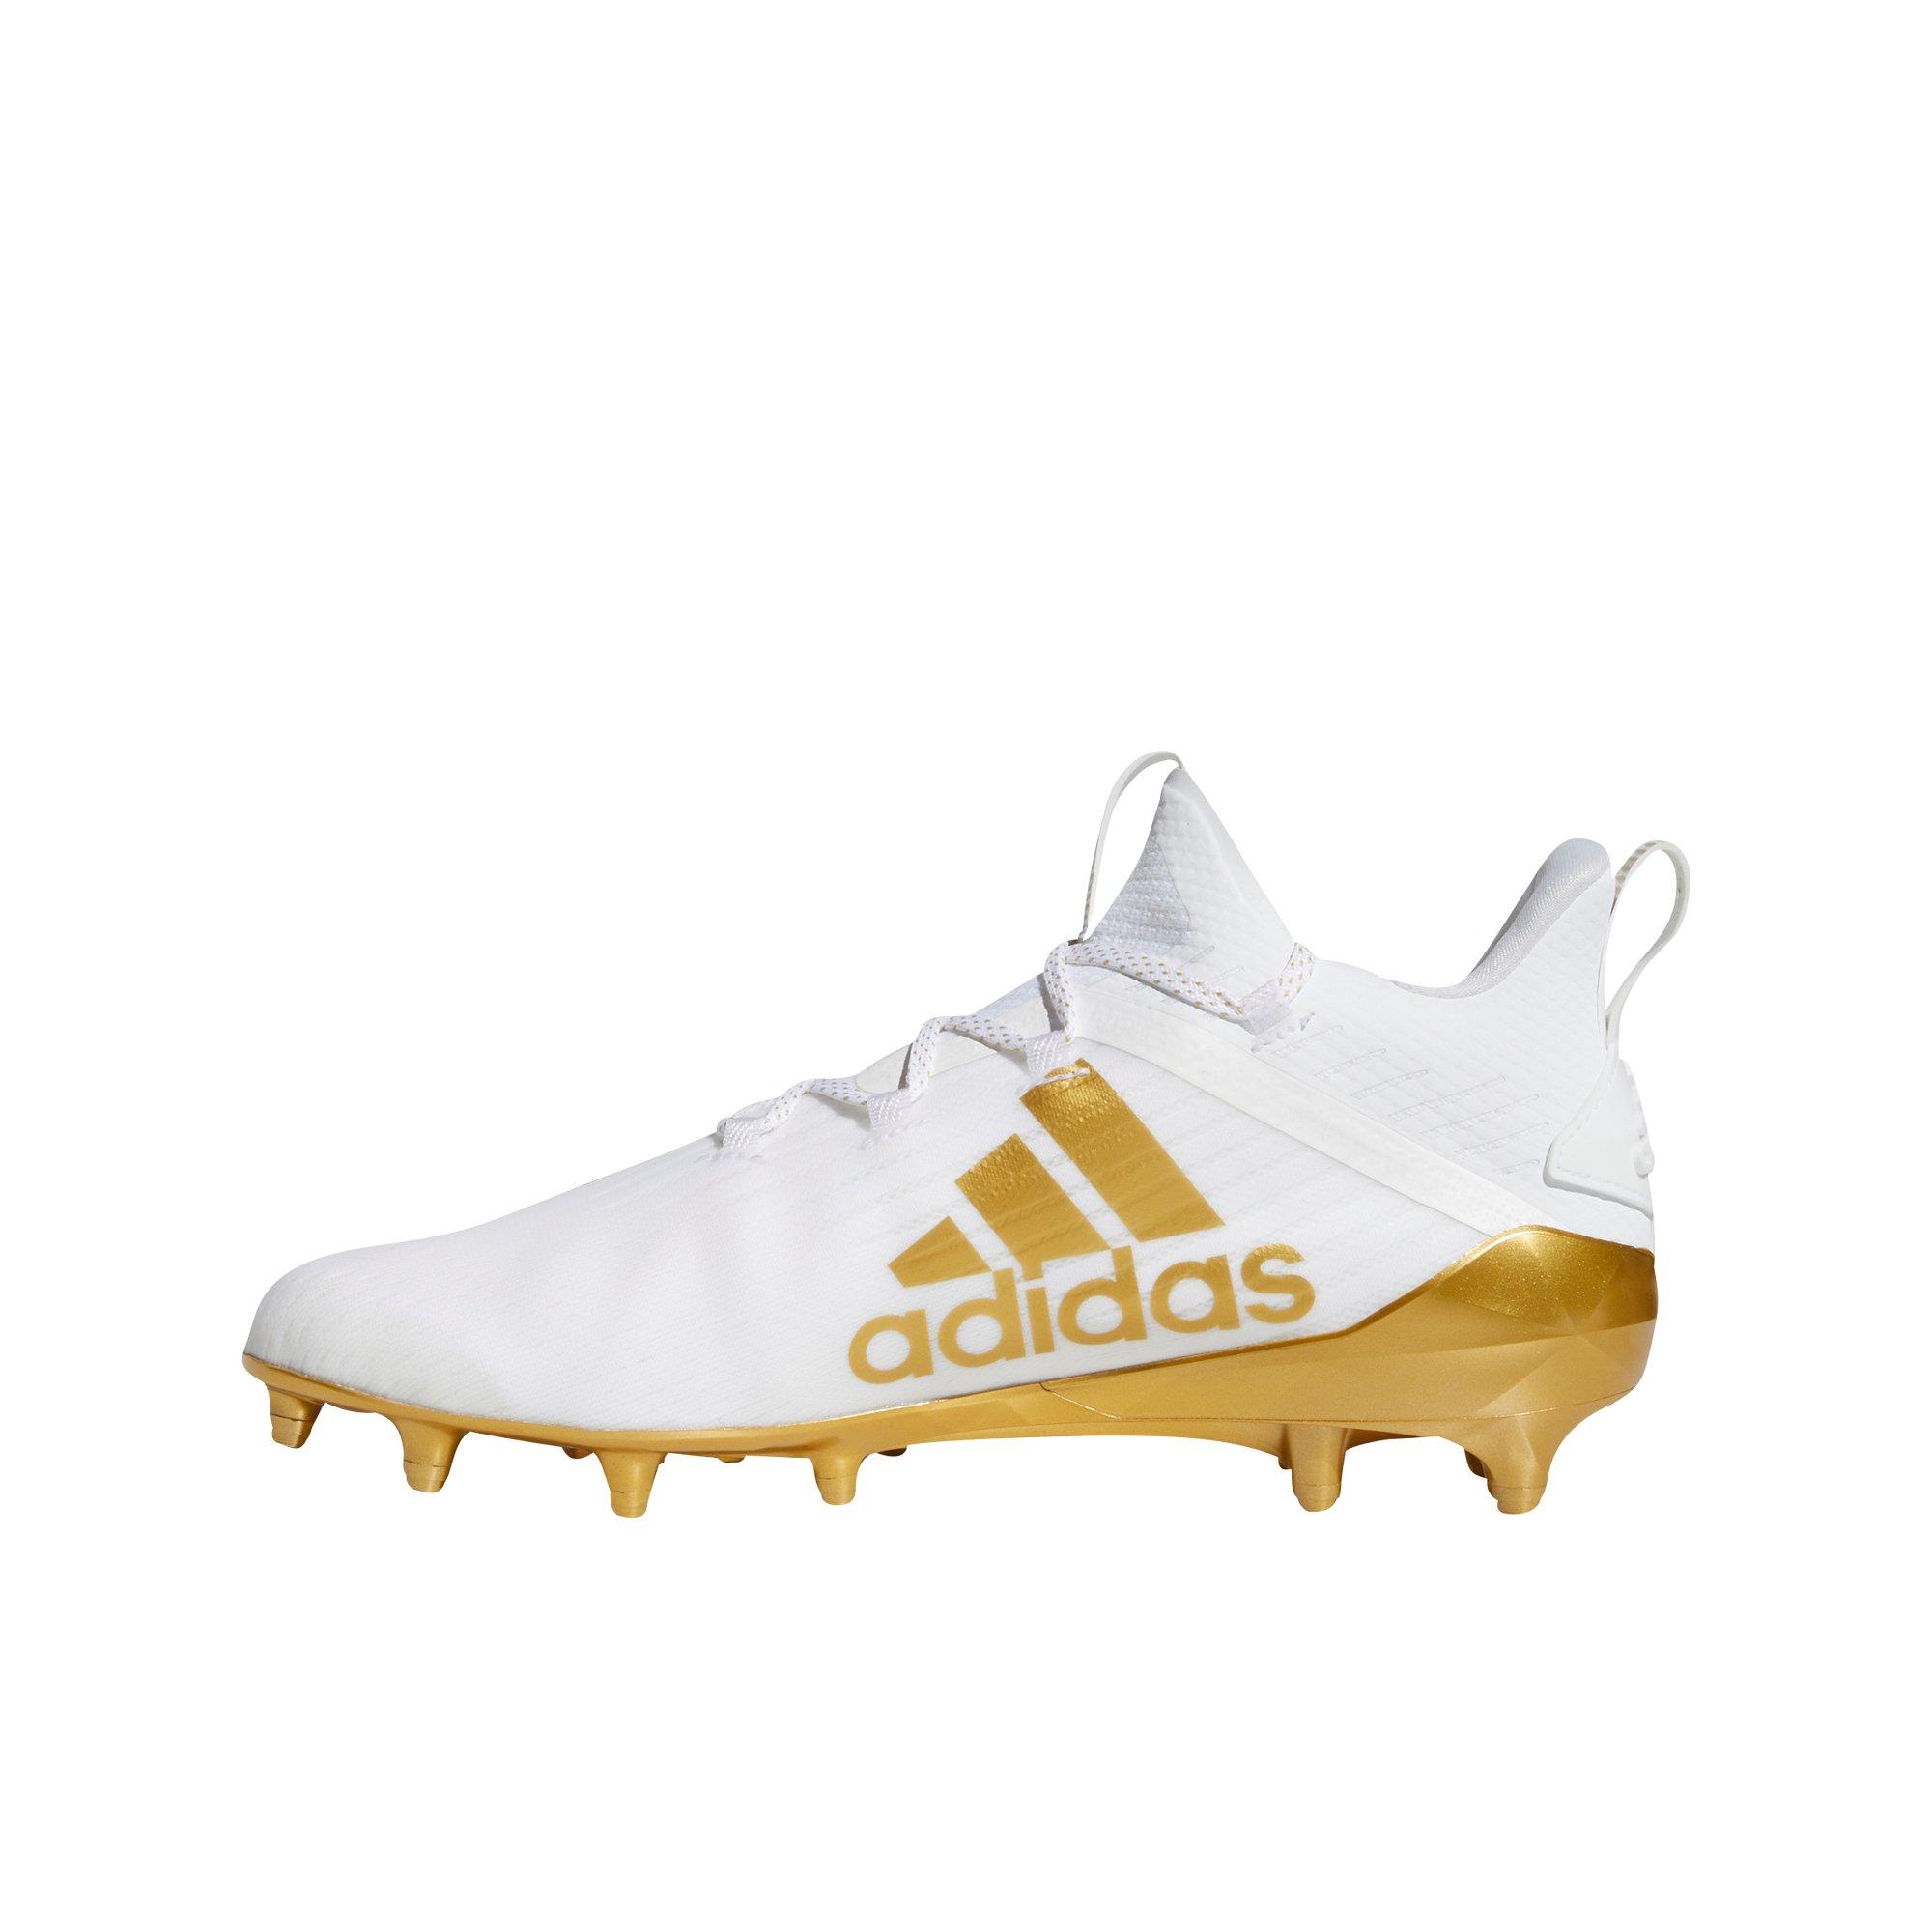 adidas adizero white and gold